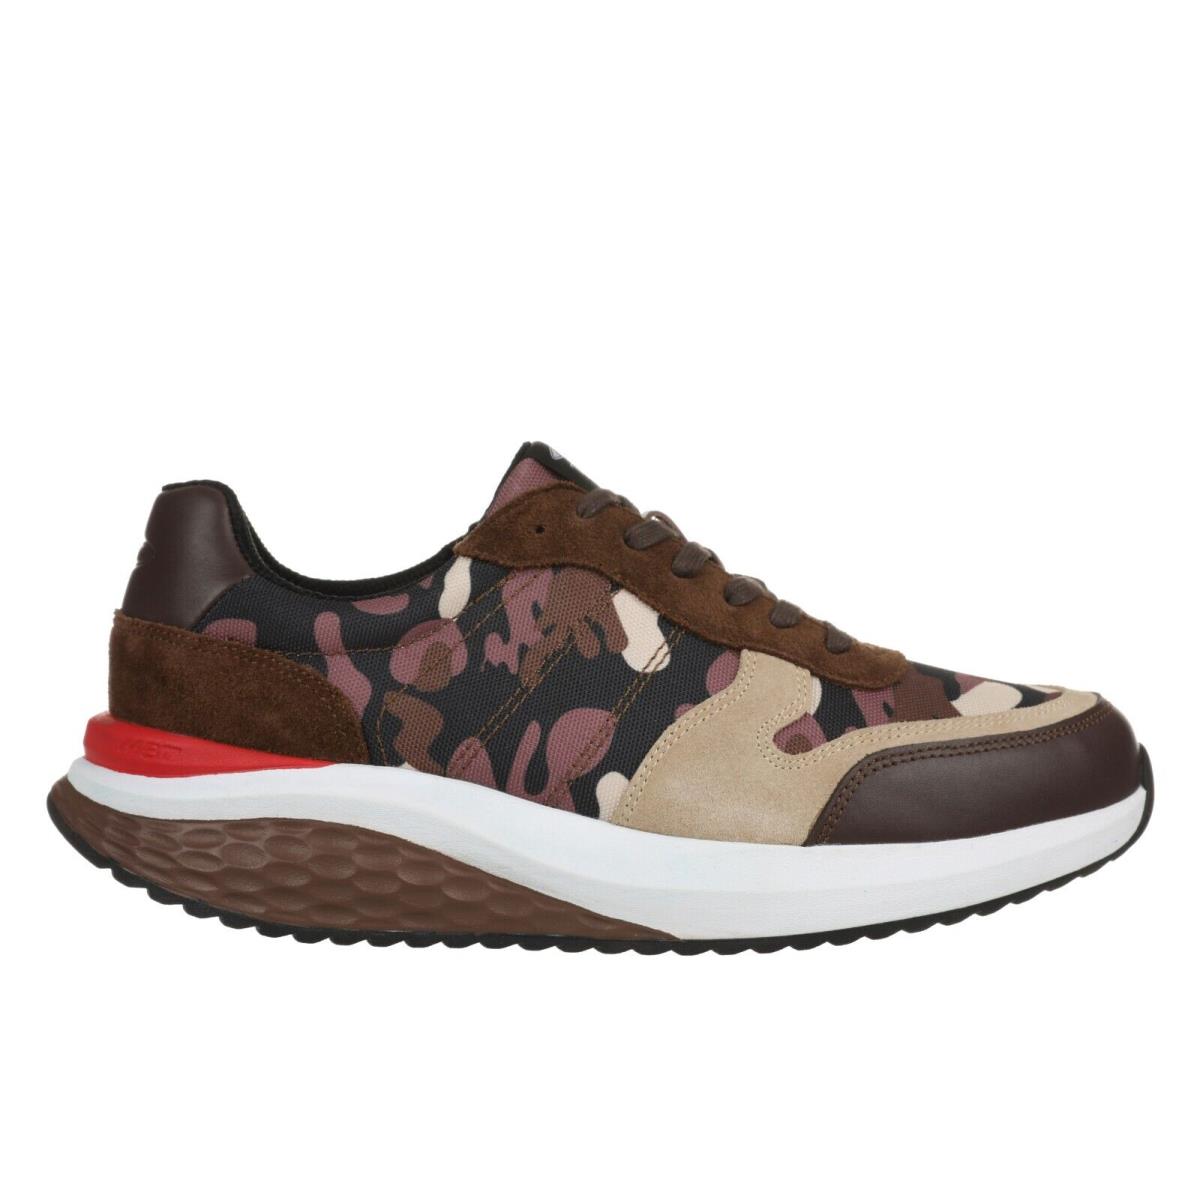 Mbt Tiano Men`s Comfort Urban Sneaker 3 Level Rock Cushioned Ride 2 Colors - Manufacturer: navy, dark brown